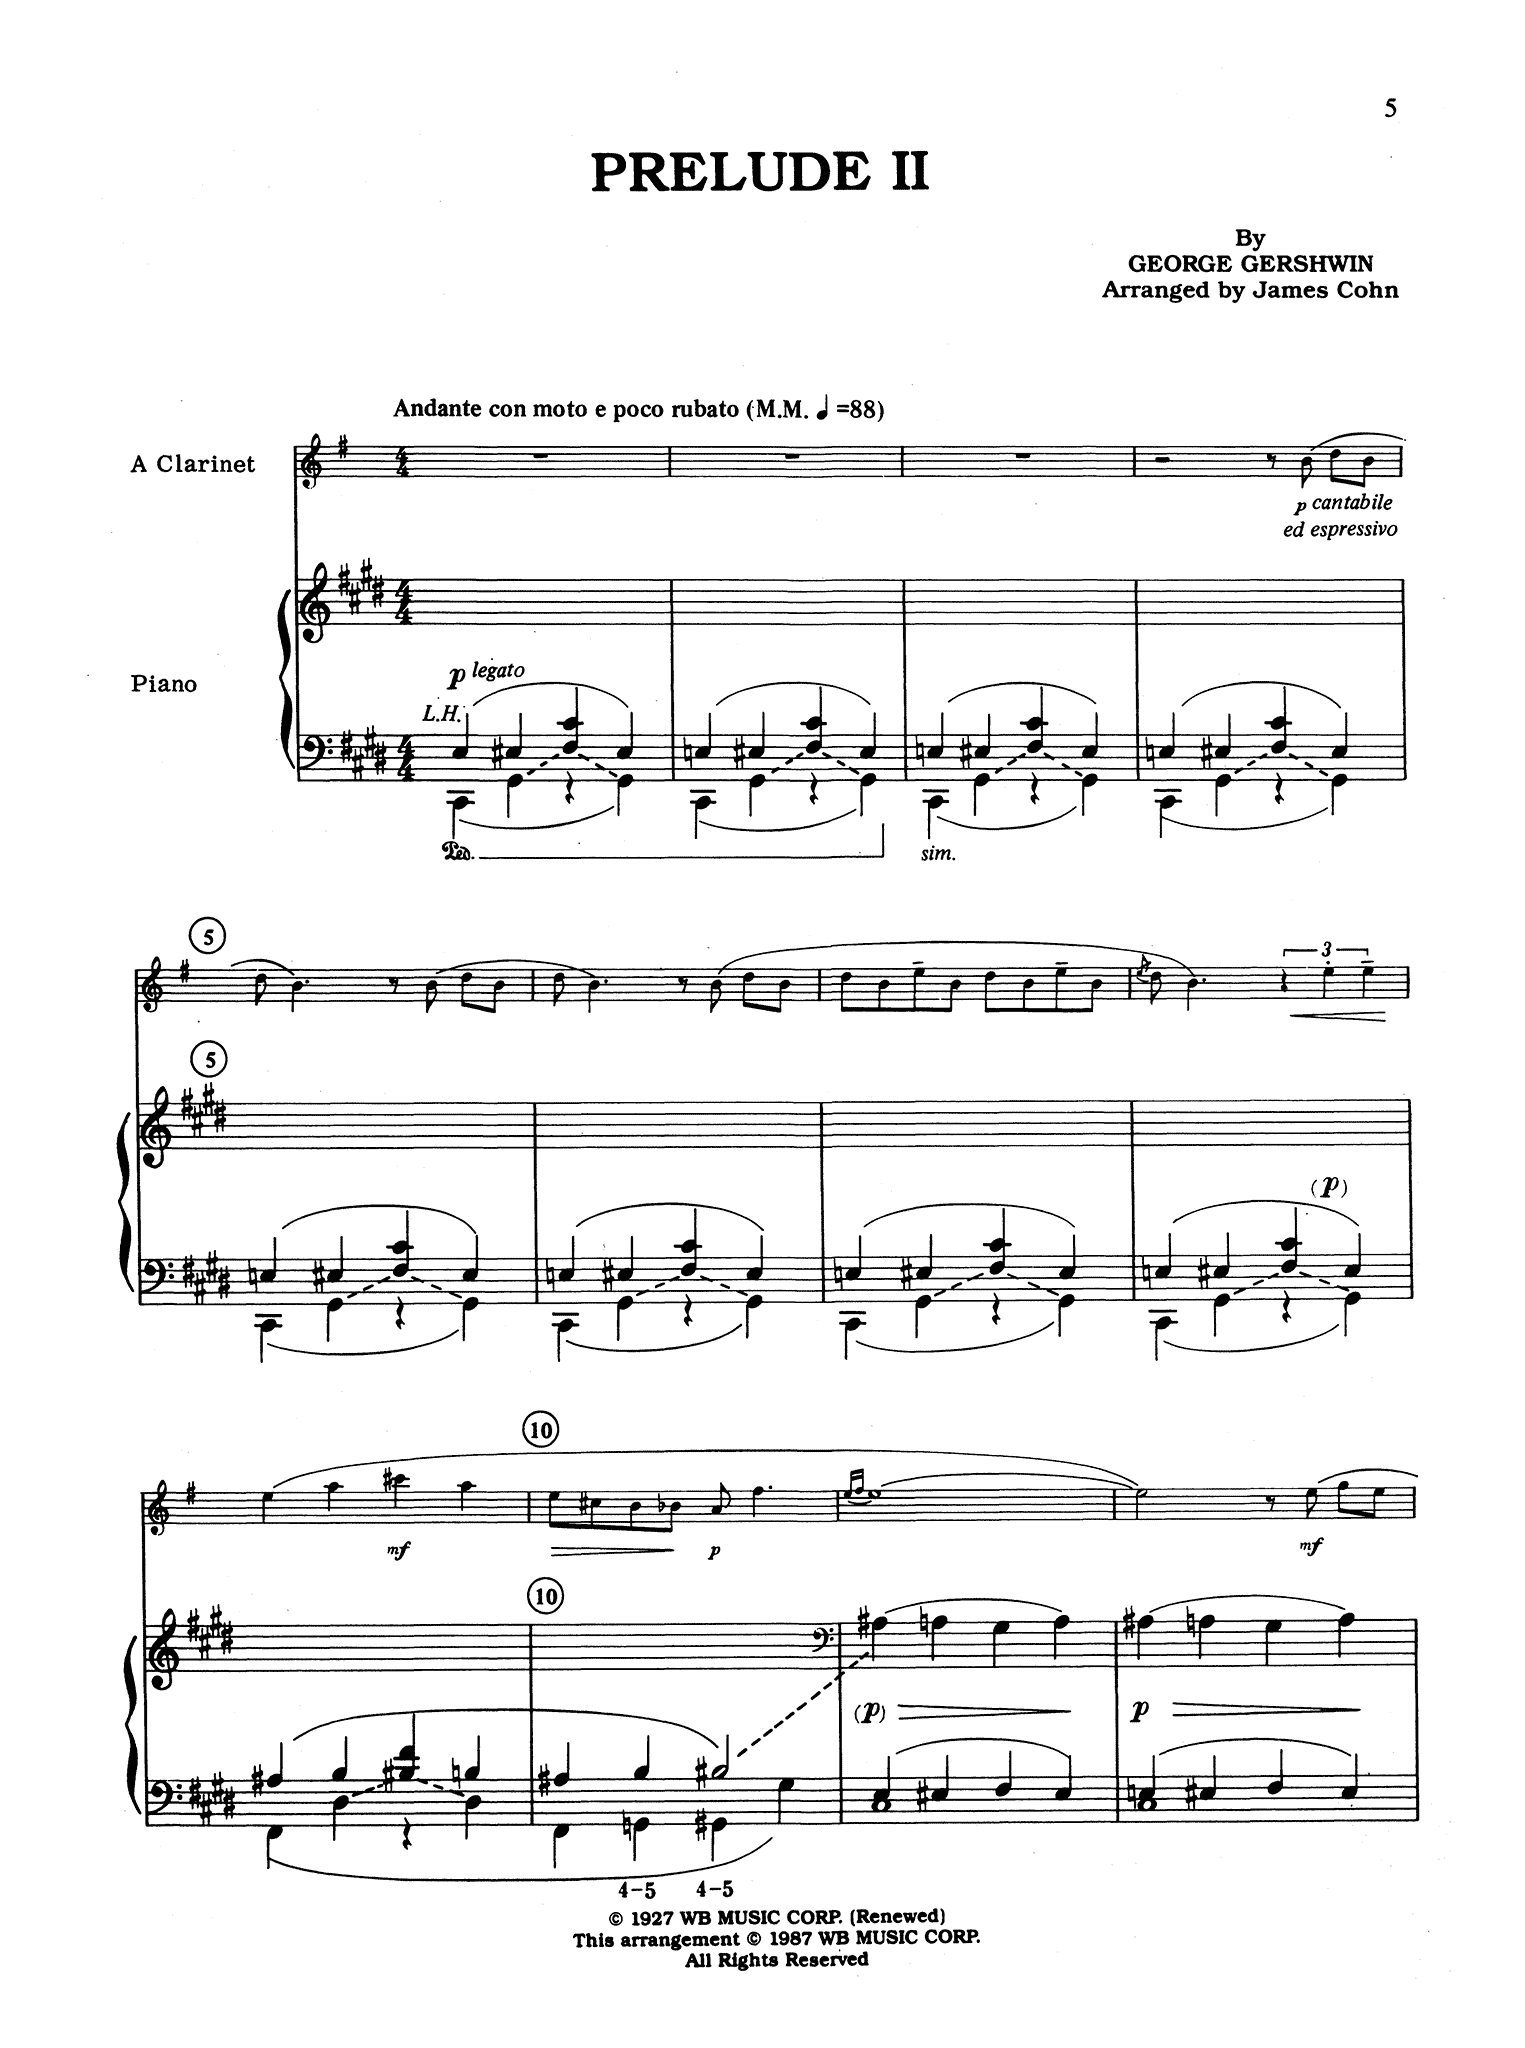 Gershwin 3 Preludes, arranged by Cohn - Movement 2